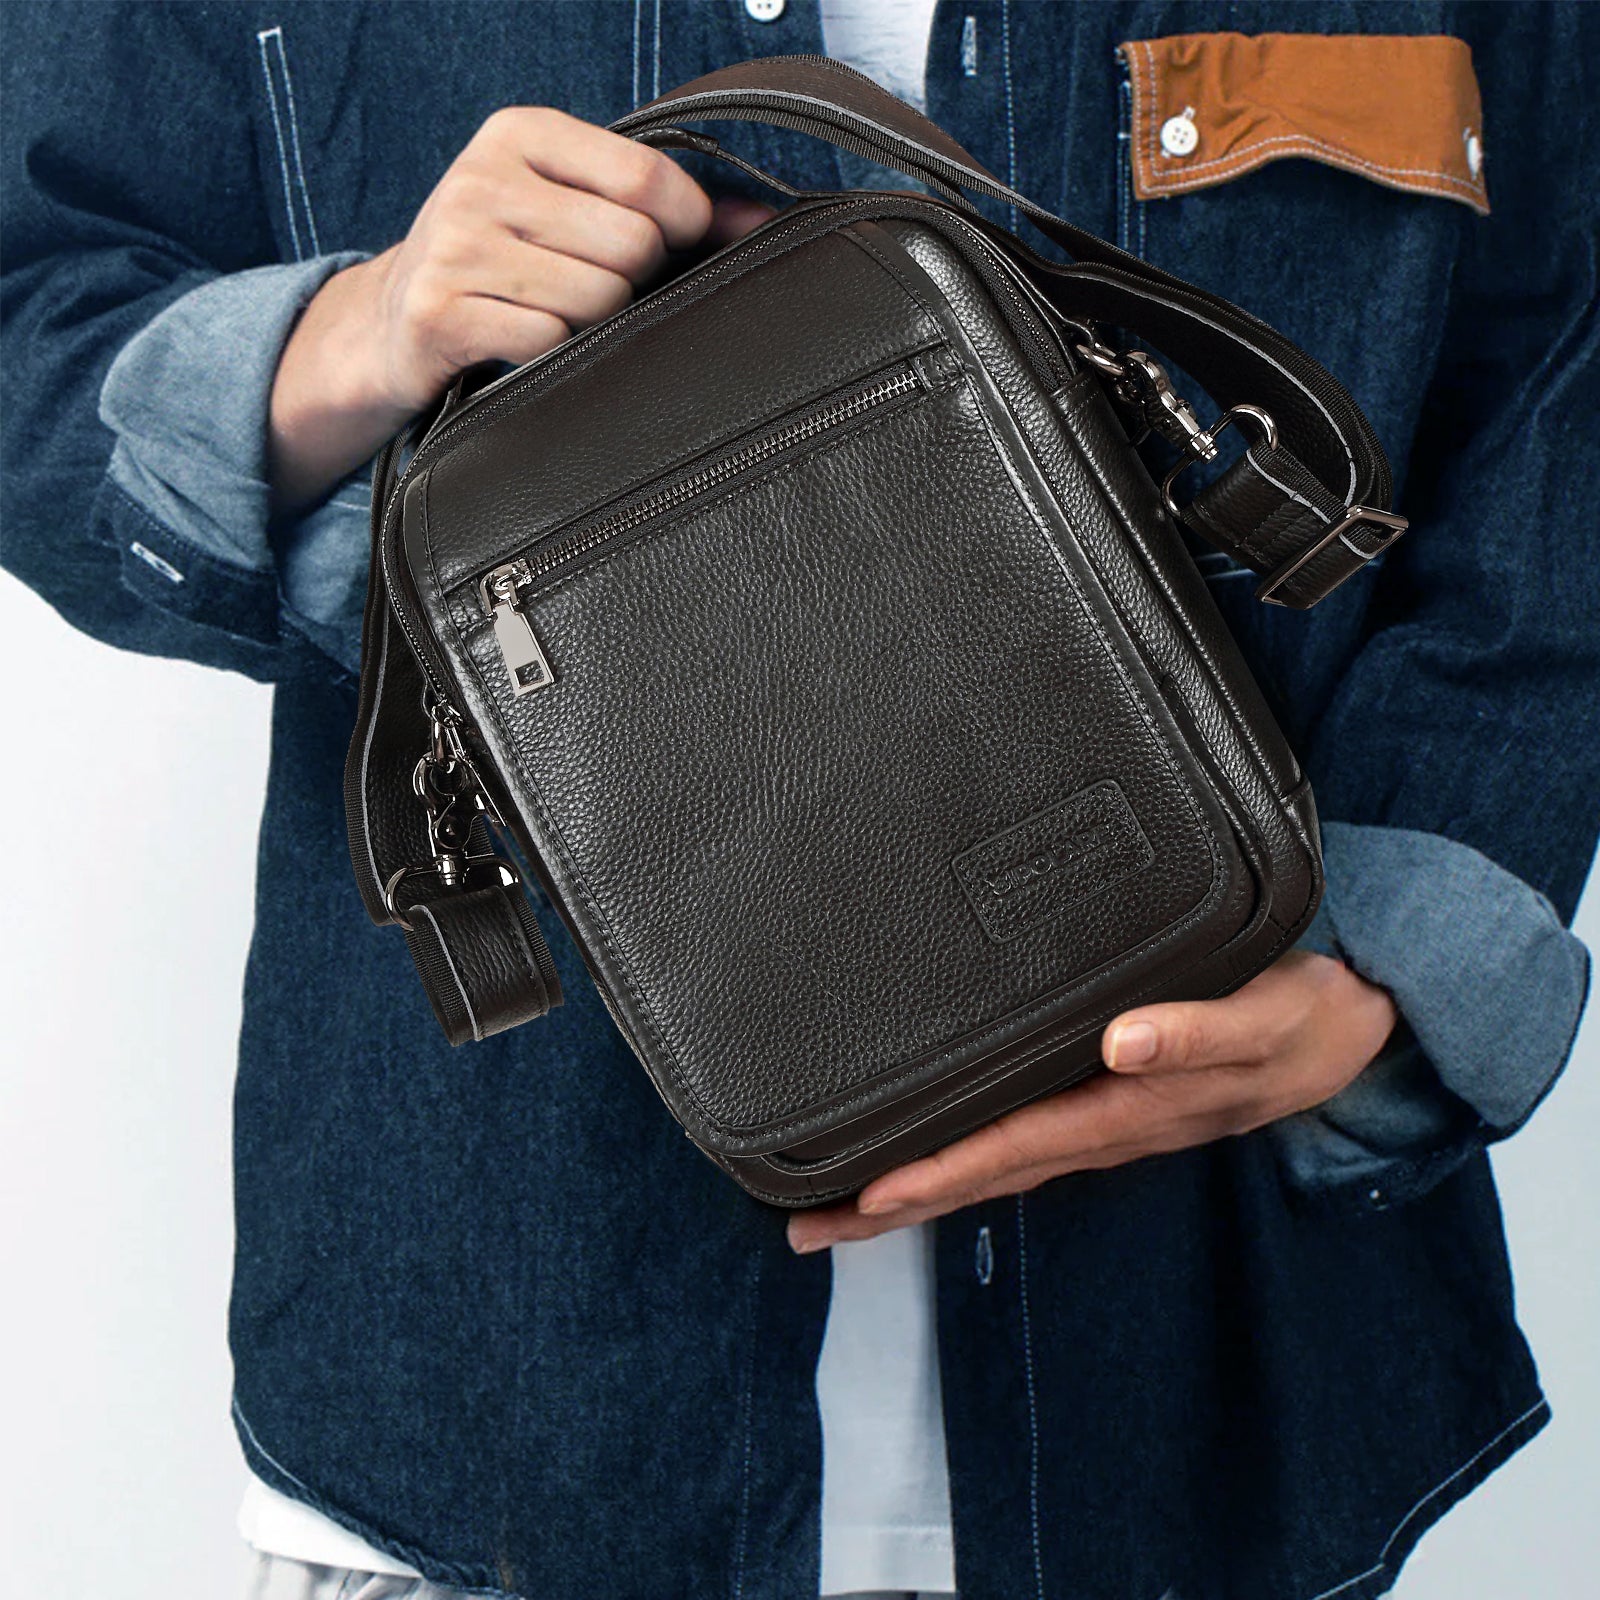 Italian Leather Messenger Bag Waterproof Travel Shoulder Bag (Model Display)